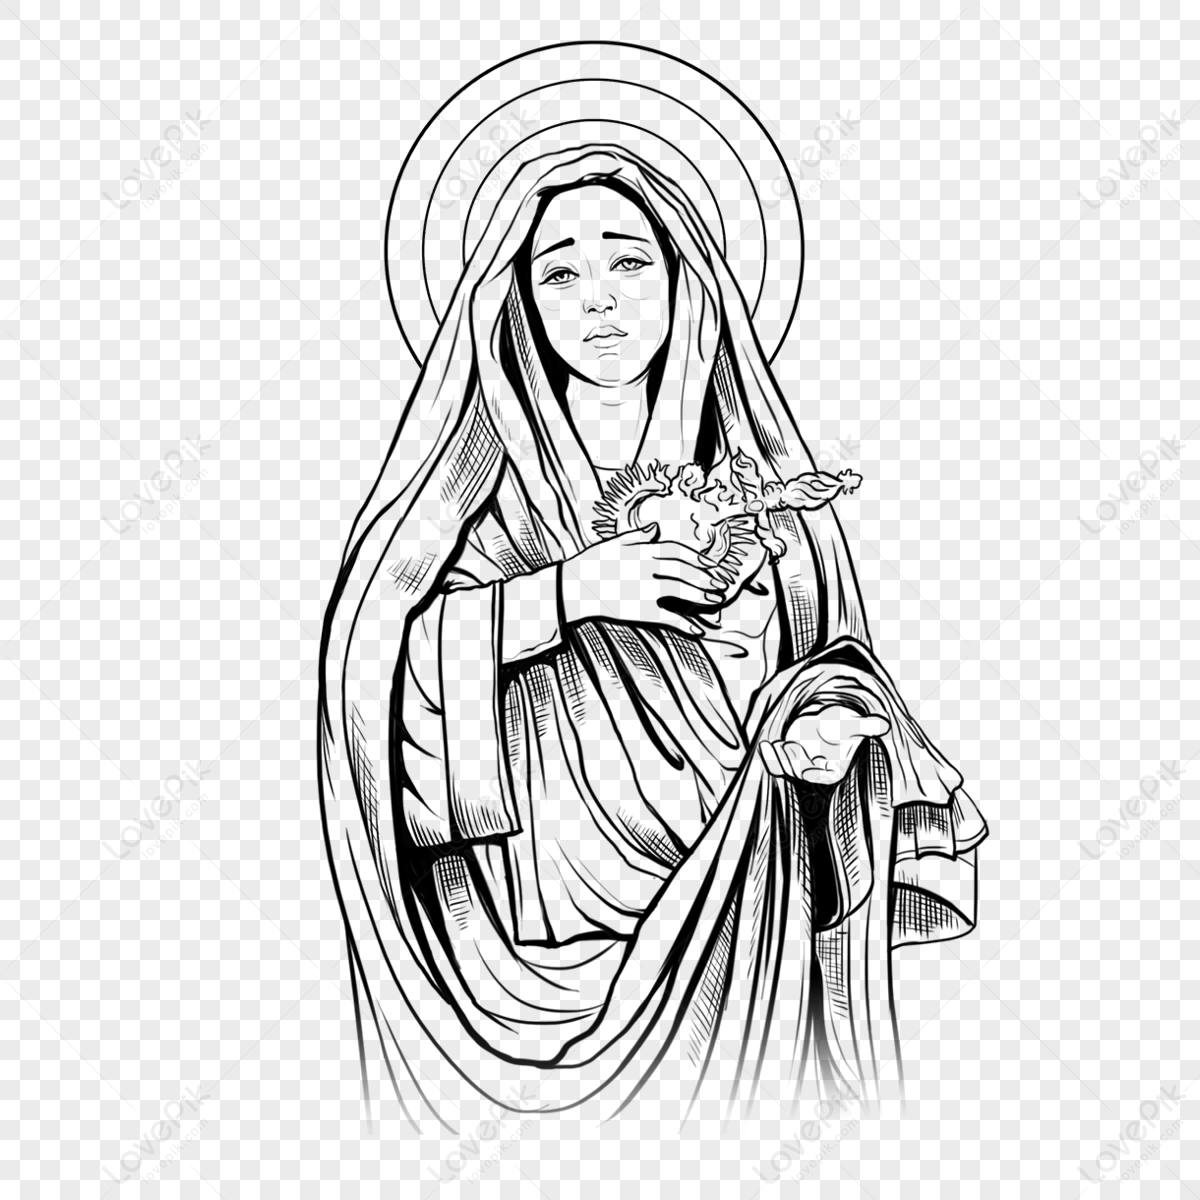 Sketch Black And White Virgin Mary Christian Catholic European ...